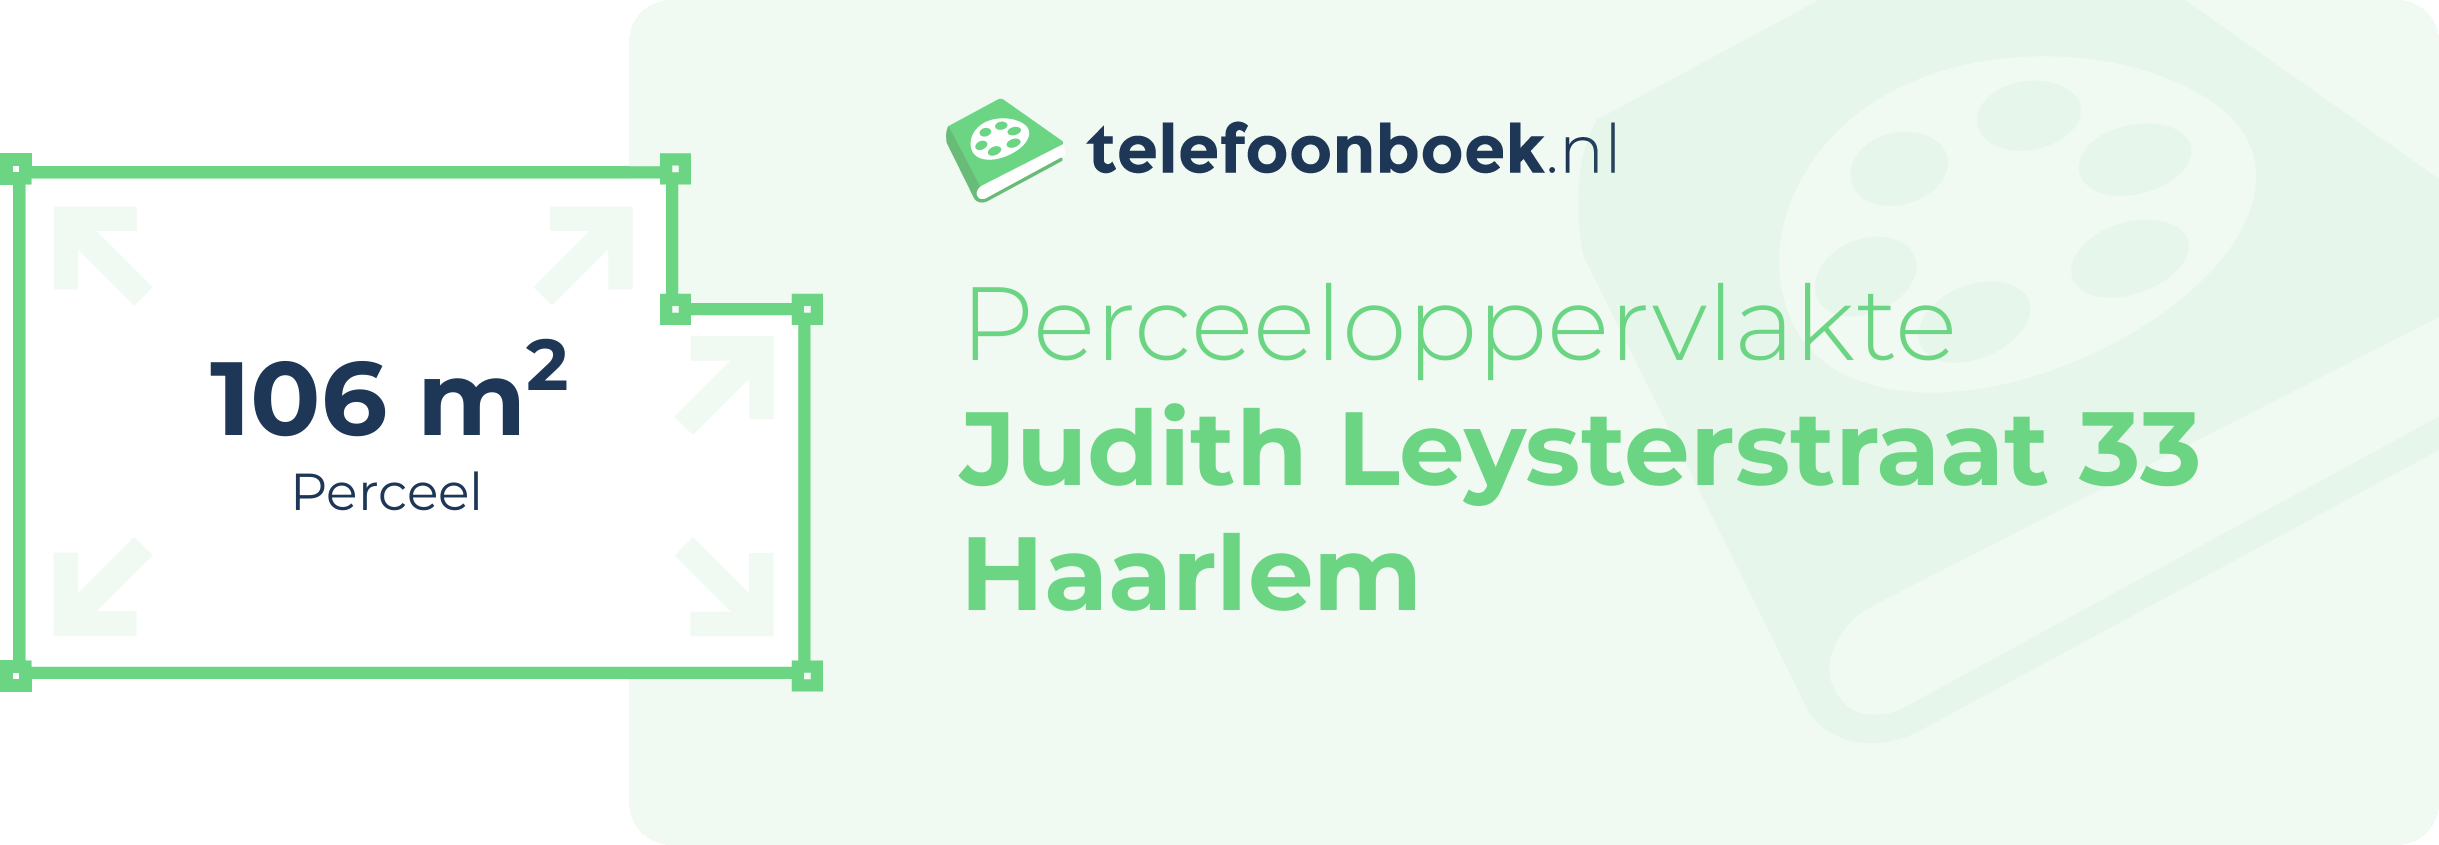 Perceeloppervlakte Judith Leysterstraat 33 Haarlem